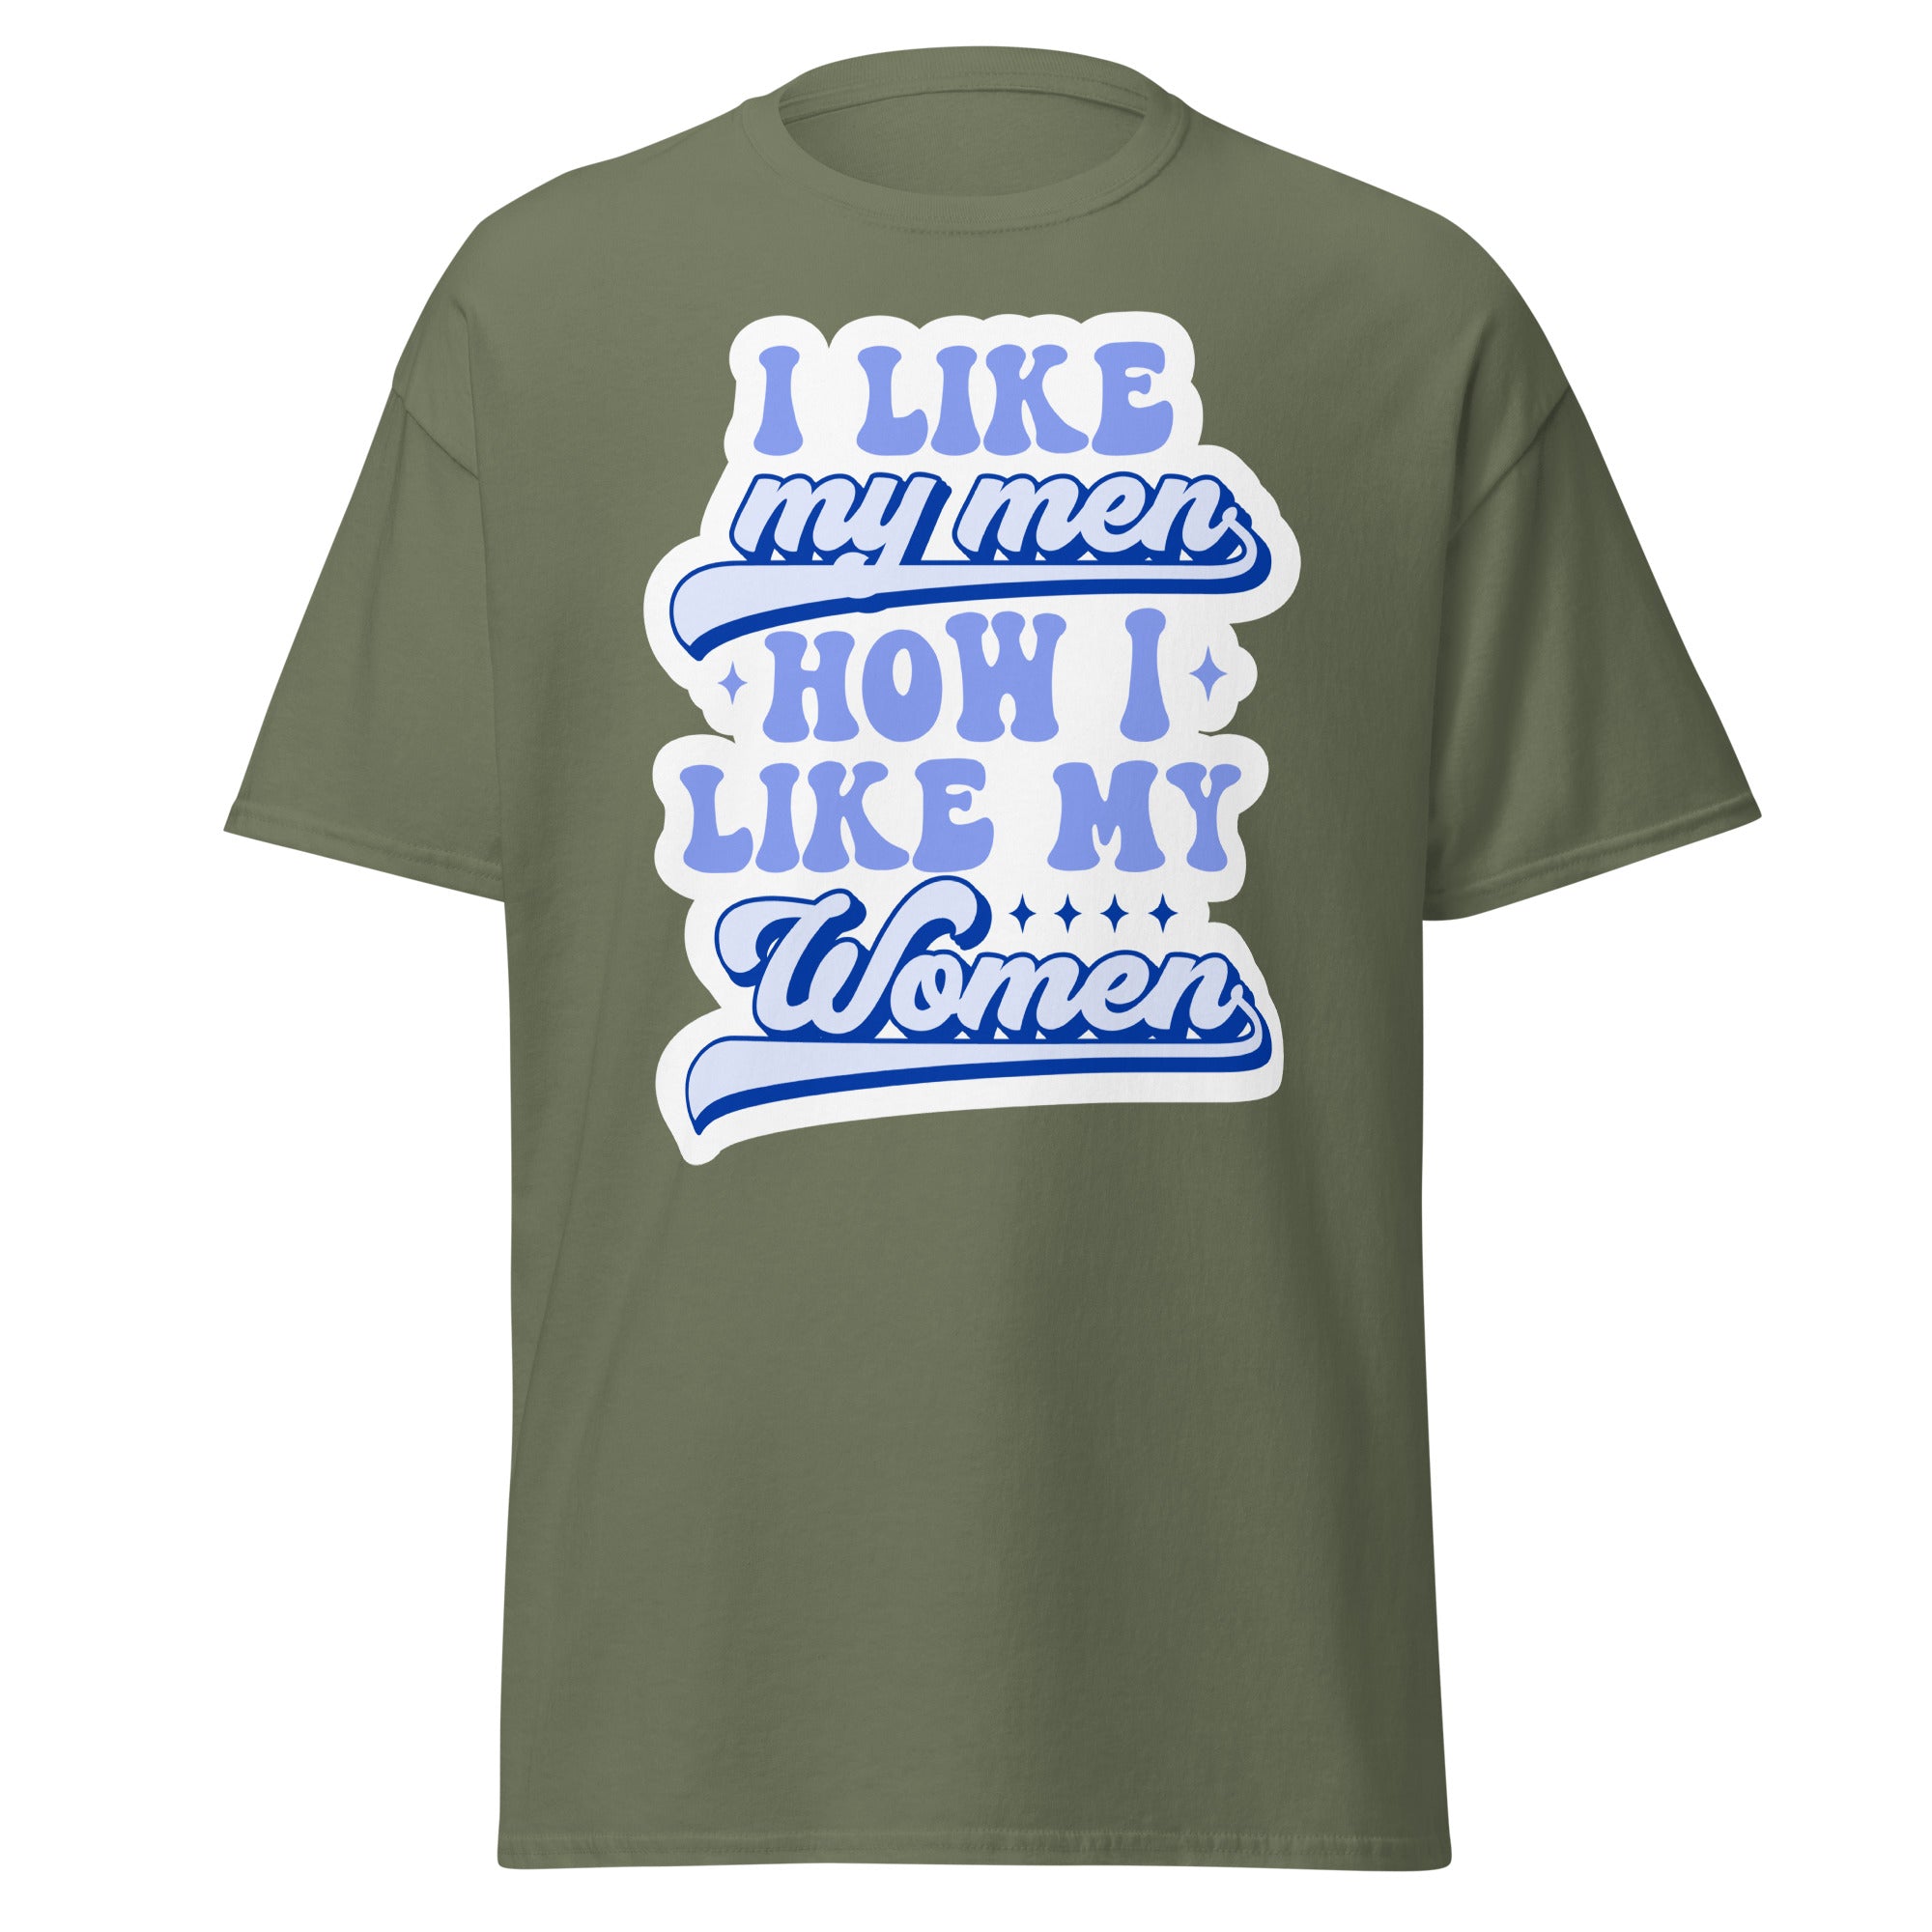 I LIKE my men HOW I LIKE MY WOMEN Unisex T Shirt